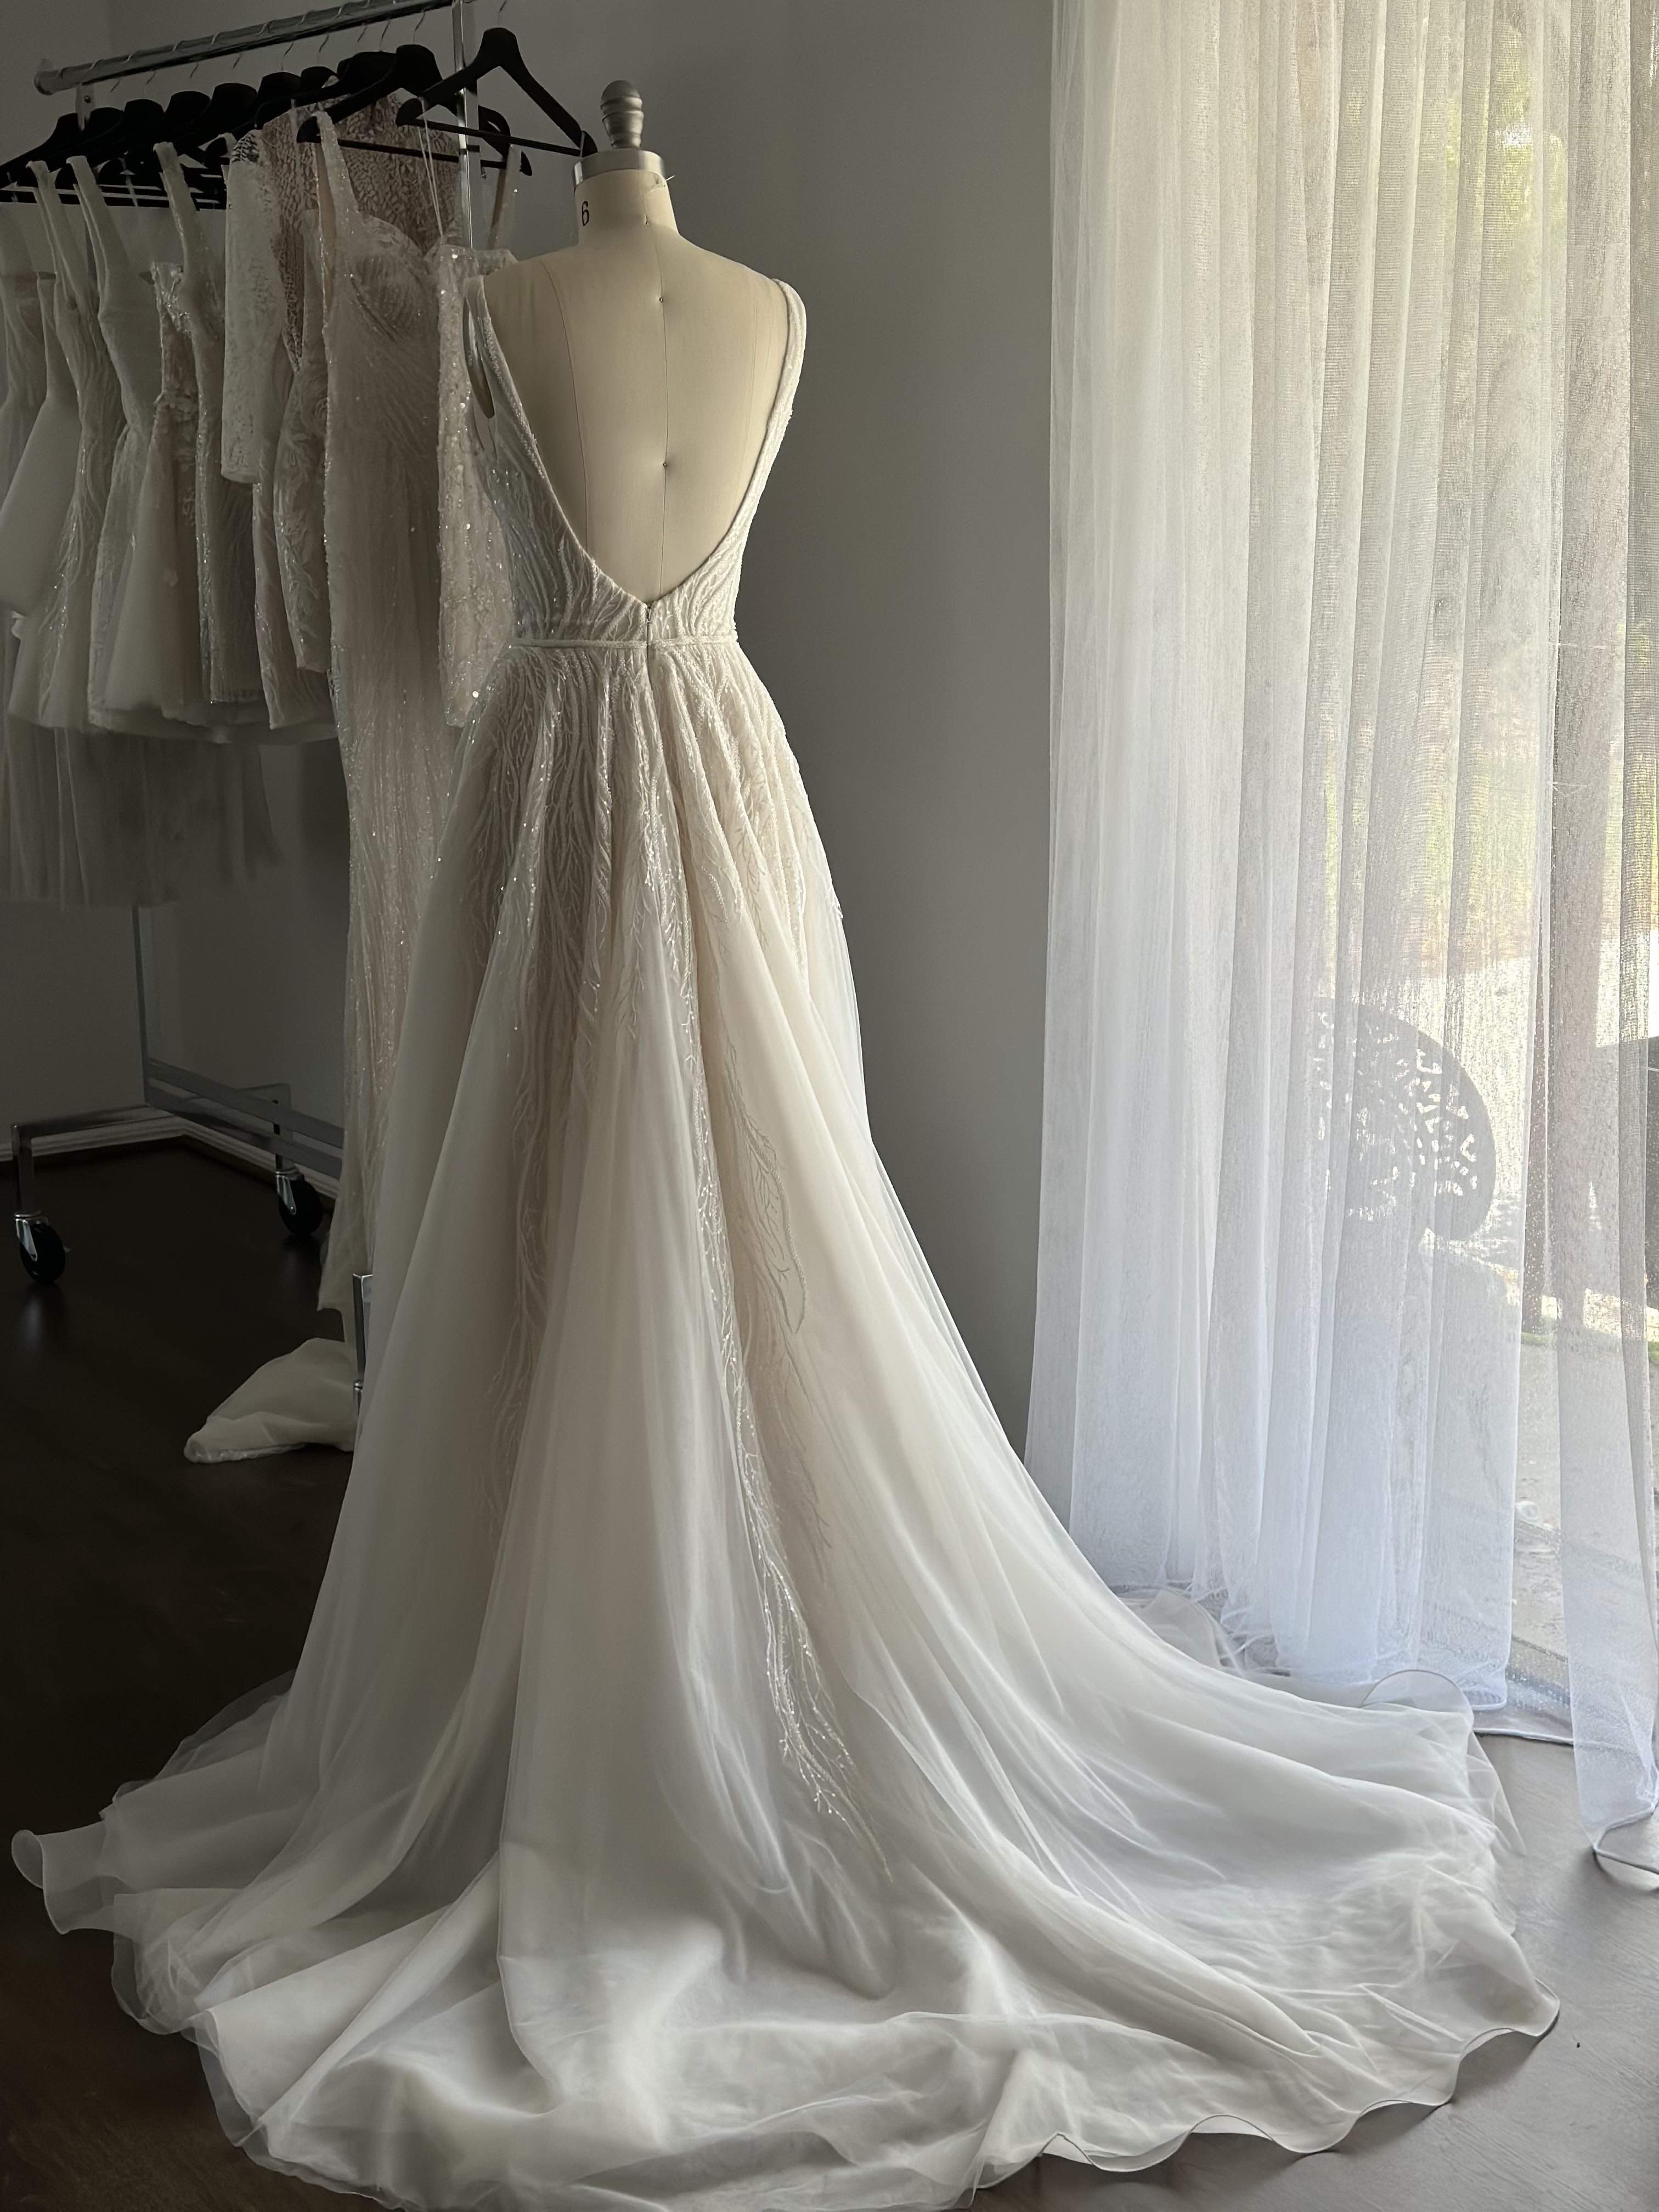 wedding dress on dress form in showroom